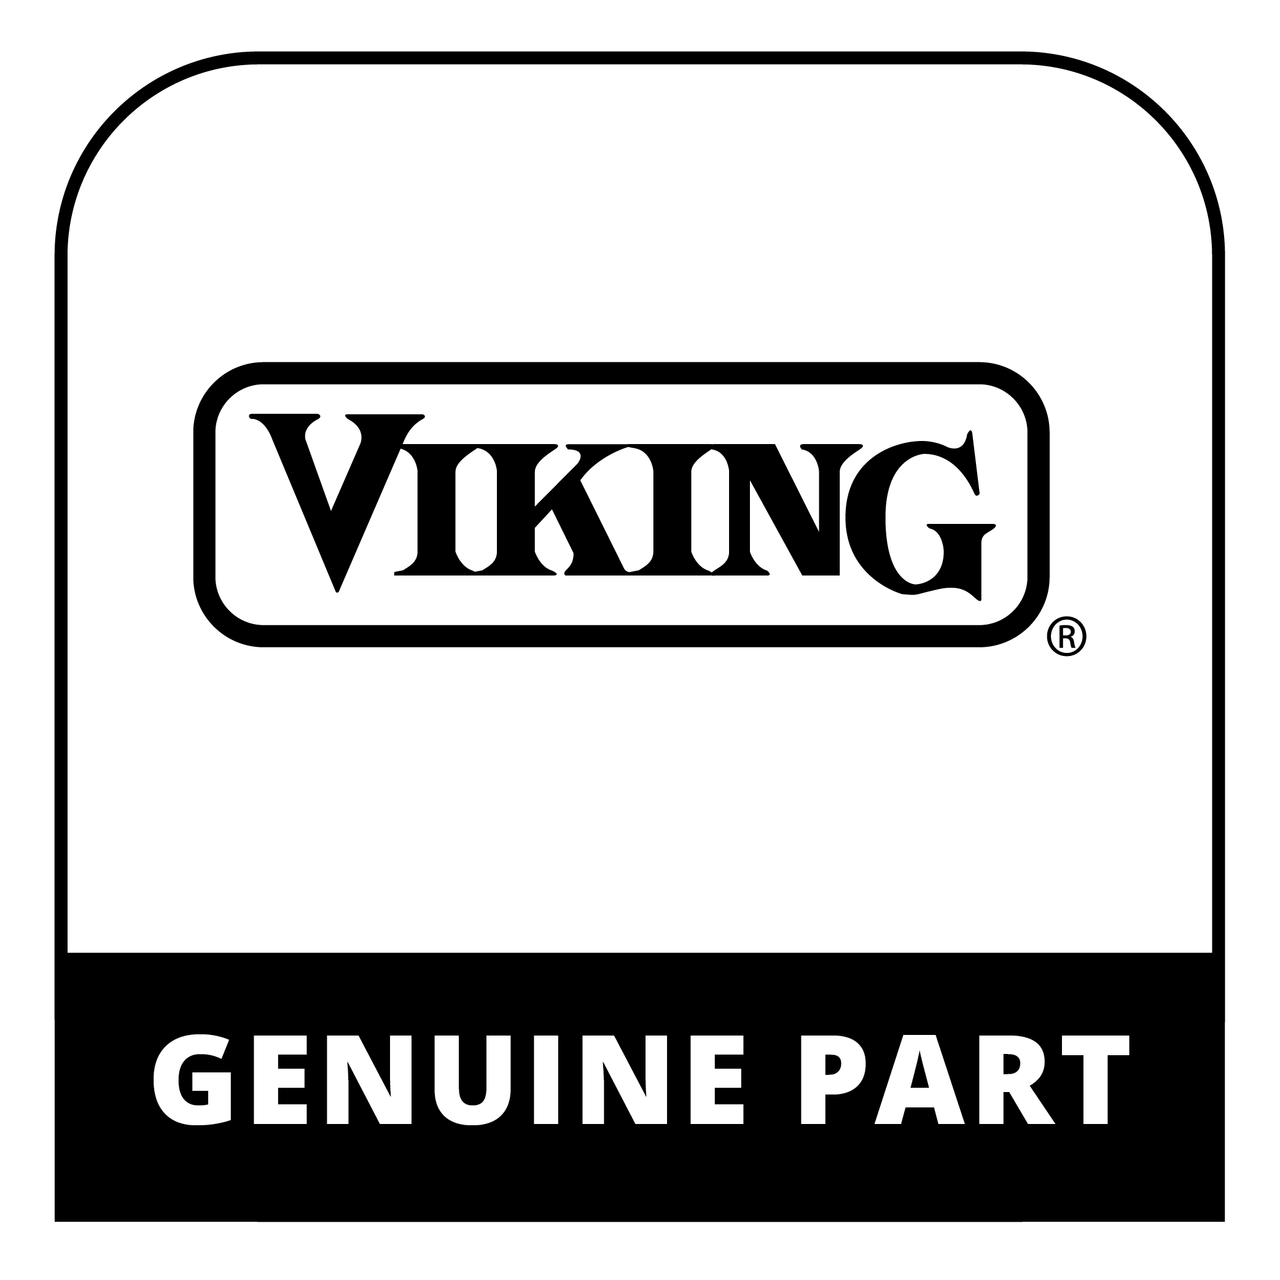 Viking S000734-000 - PART # CHANGED TO 000734-000 - Genuine Viking Part